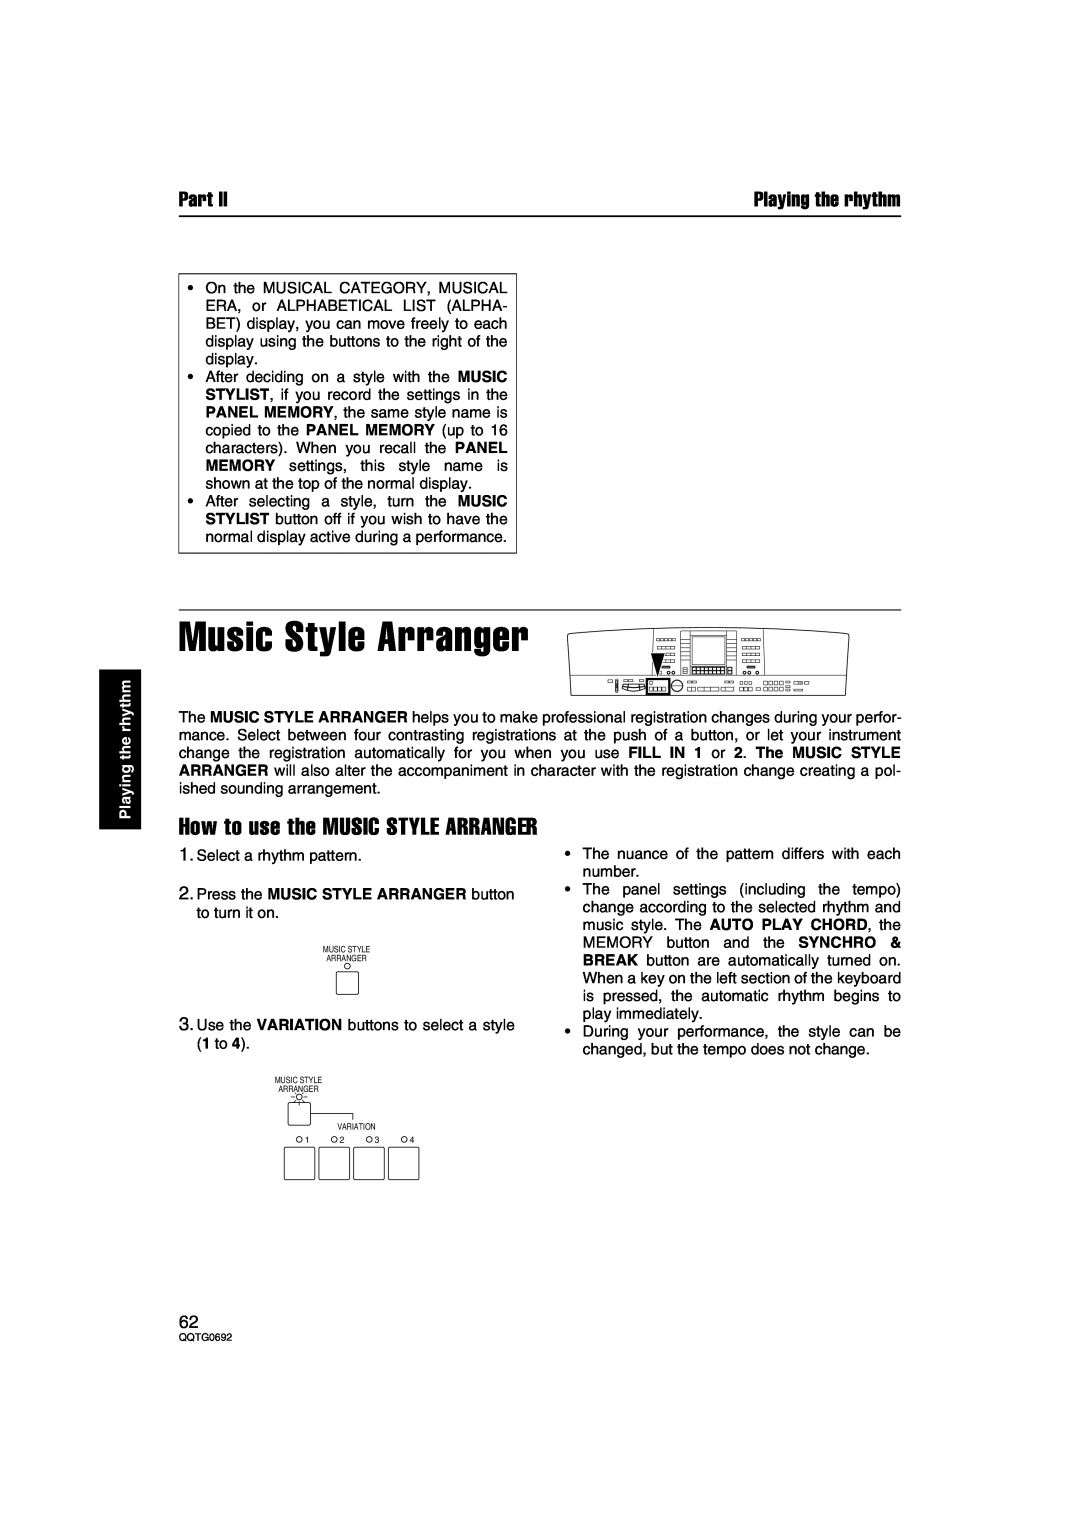 Panasonic SX-KN2600, SX-KN2400 manual Music Style Arranger, How to use the MUSIC STYLE ARRANGER, Part, Playing the rhythm 